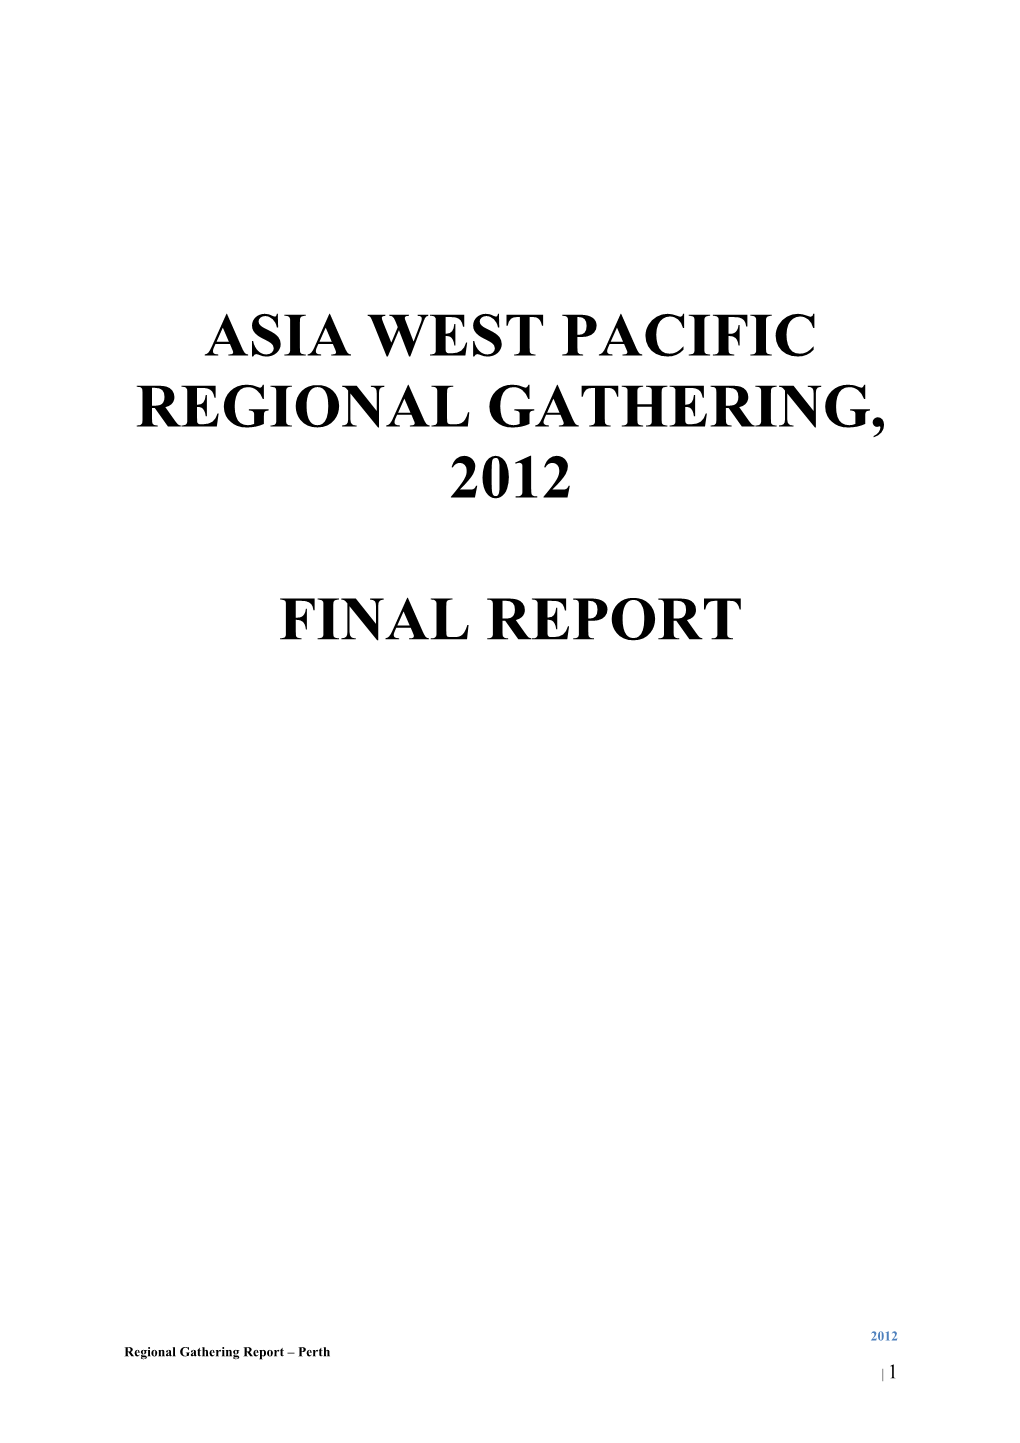 Asia/West Pacific Avp Regional Gathering 2012